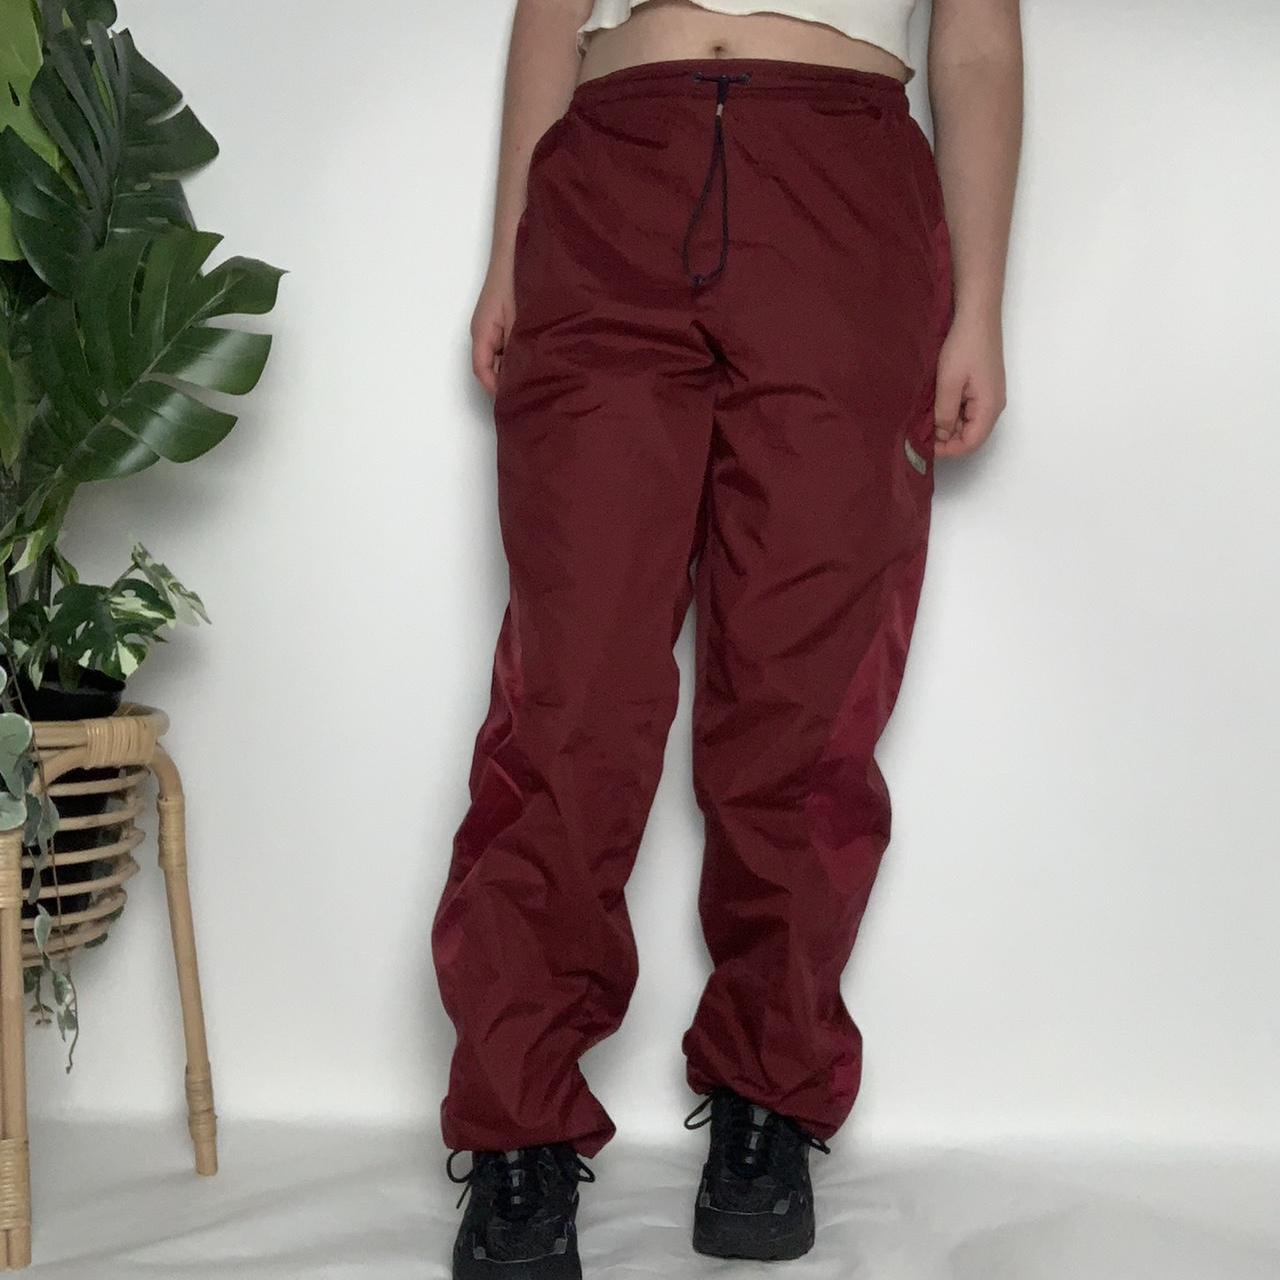 PUMA Iconic T7 Woven Track Pants Nylon Pink Size XS NWOT $65 | eBay